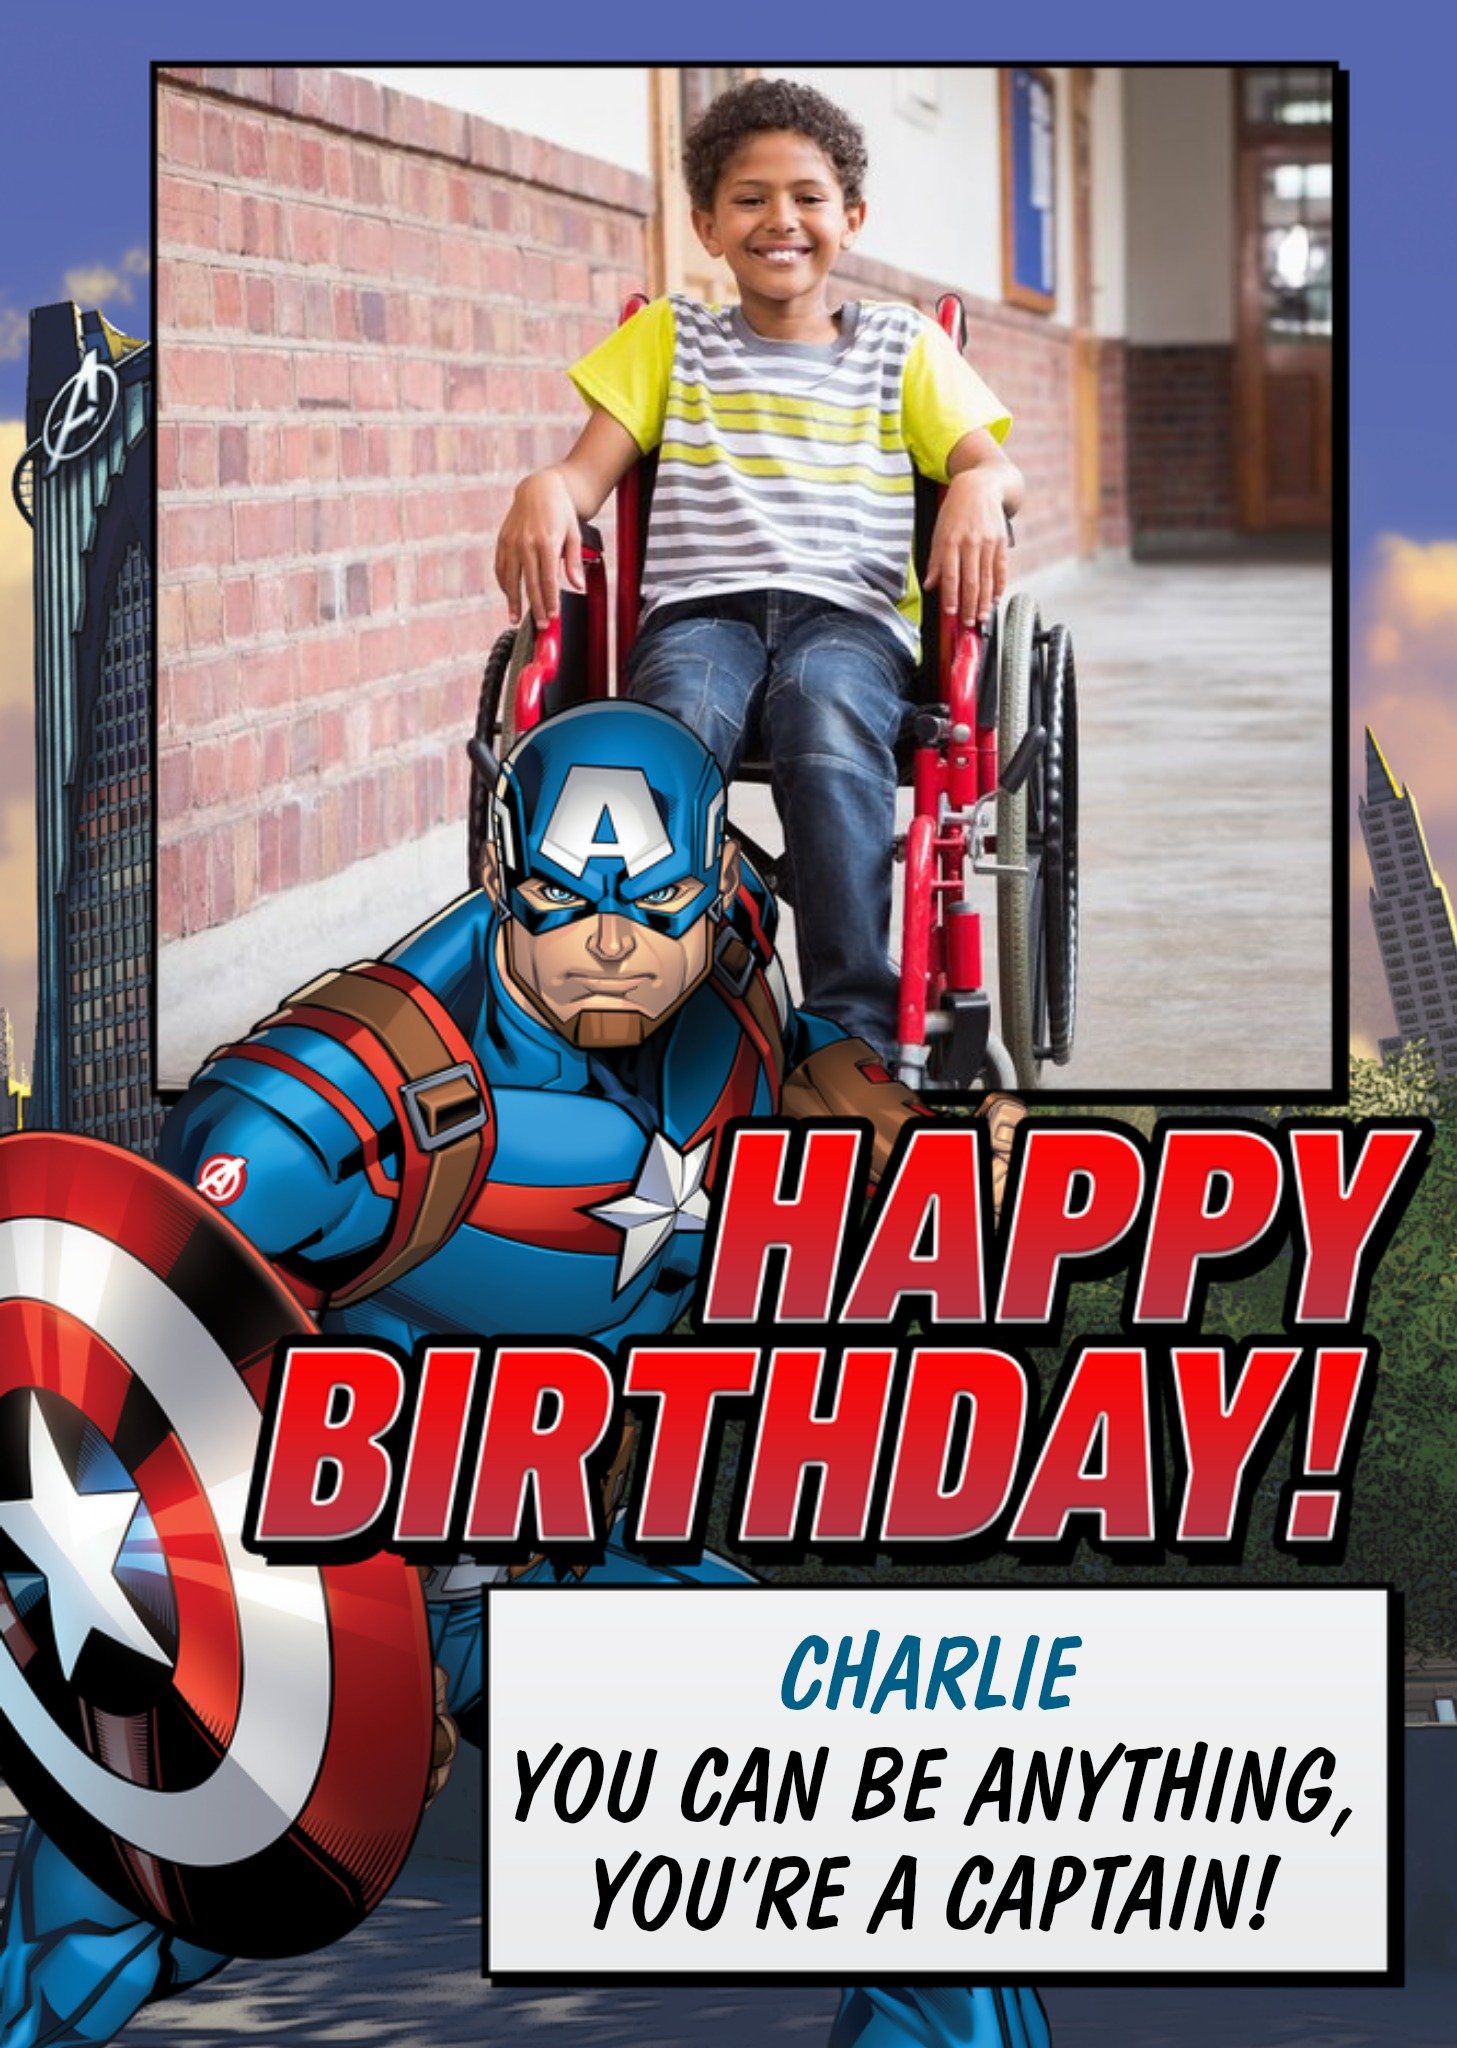 Marvel Avengers Captain America Quote Photo Upload Birthday Card Ecard